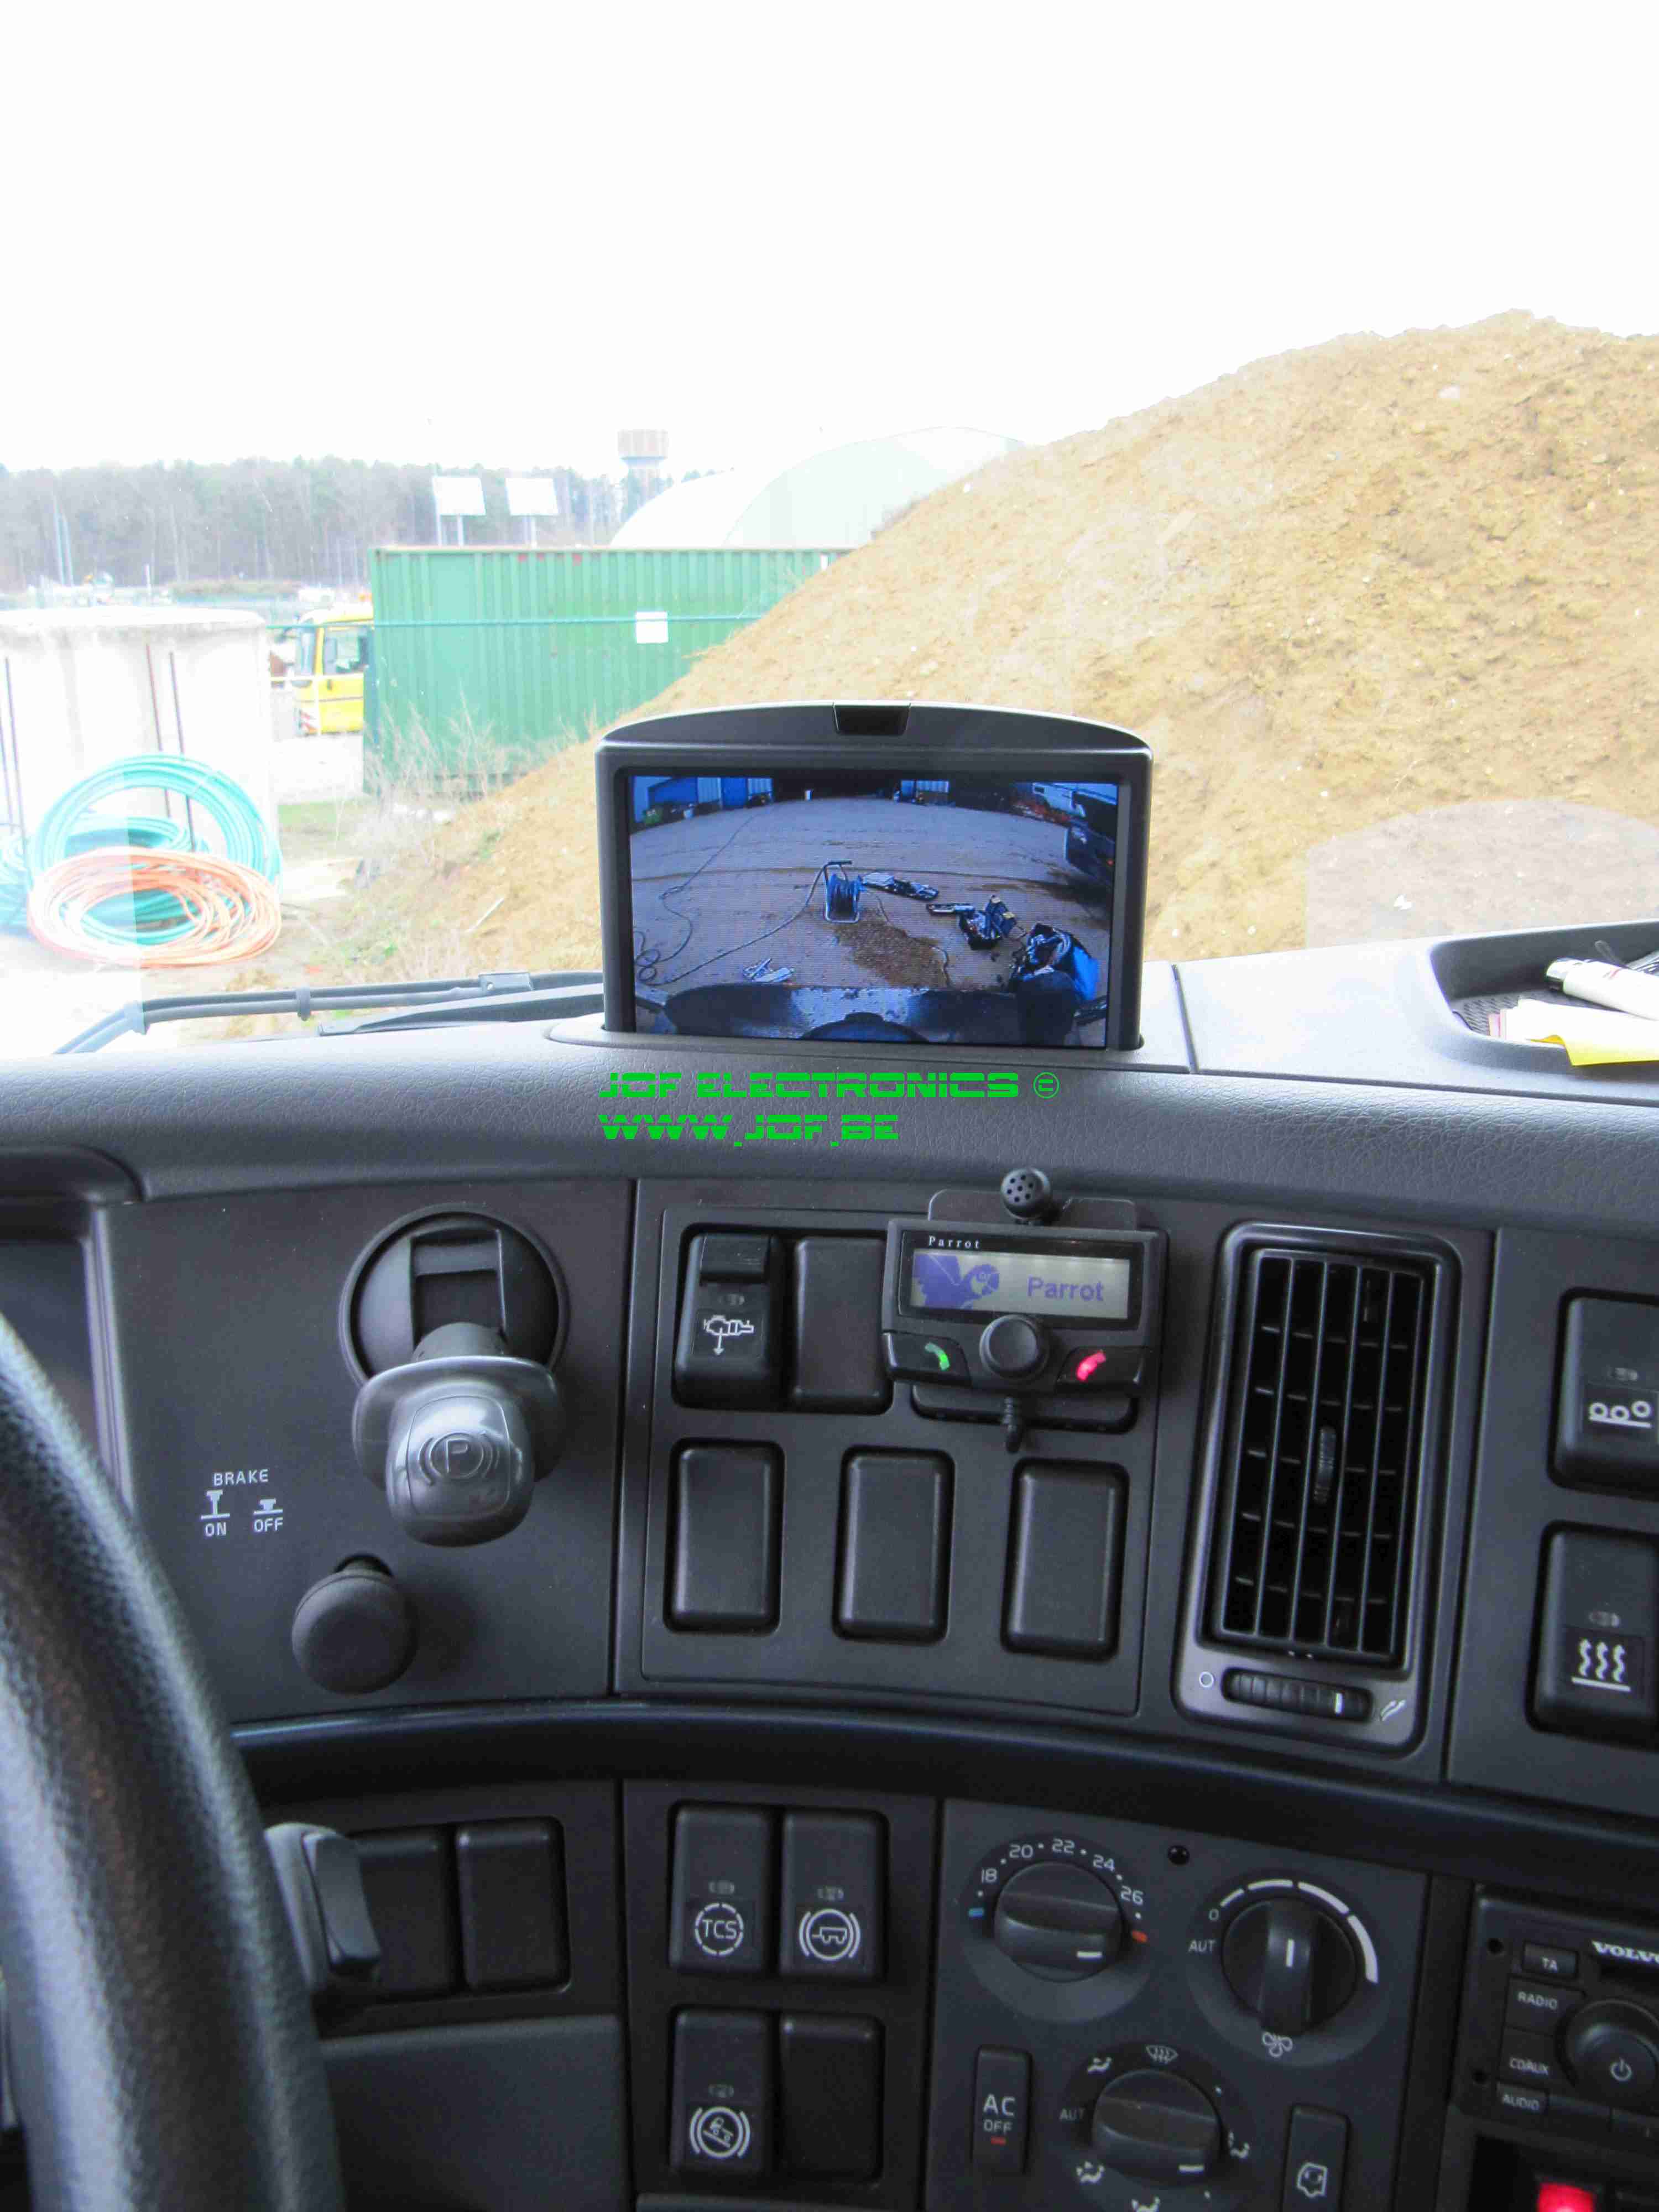 Volvo achteruitrijcamera op orgineel scherm